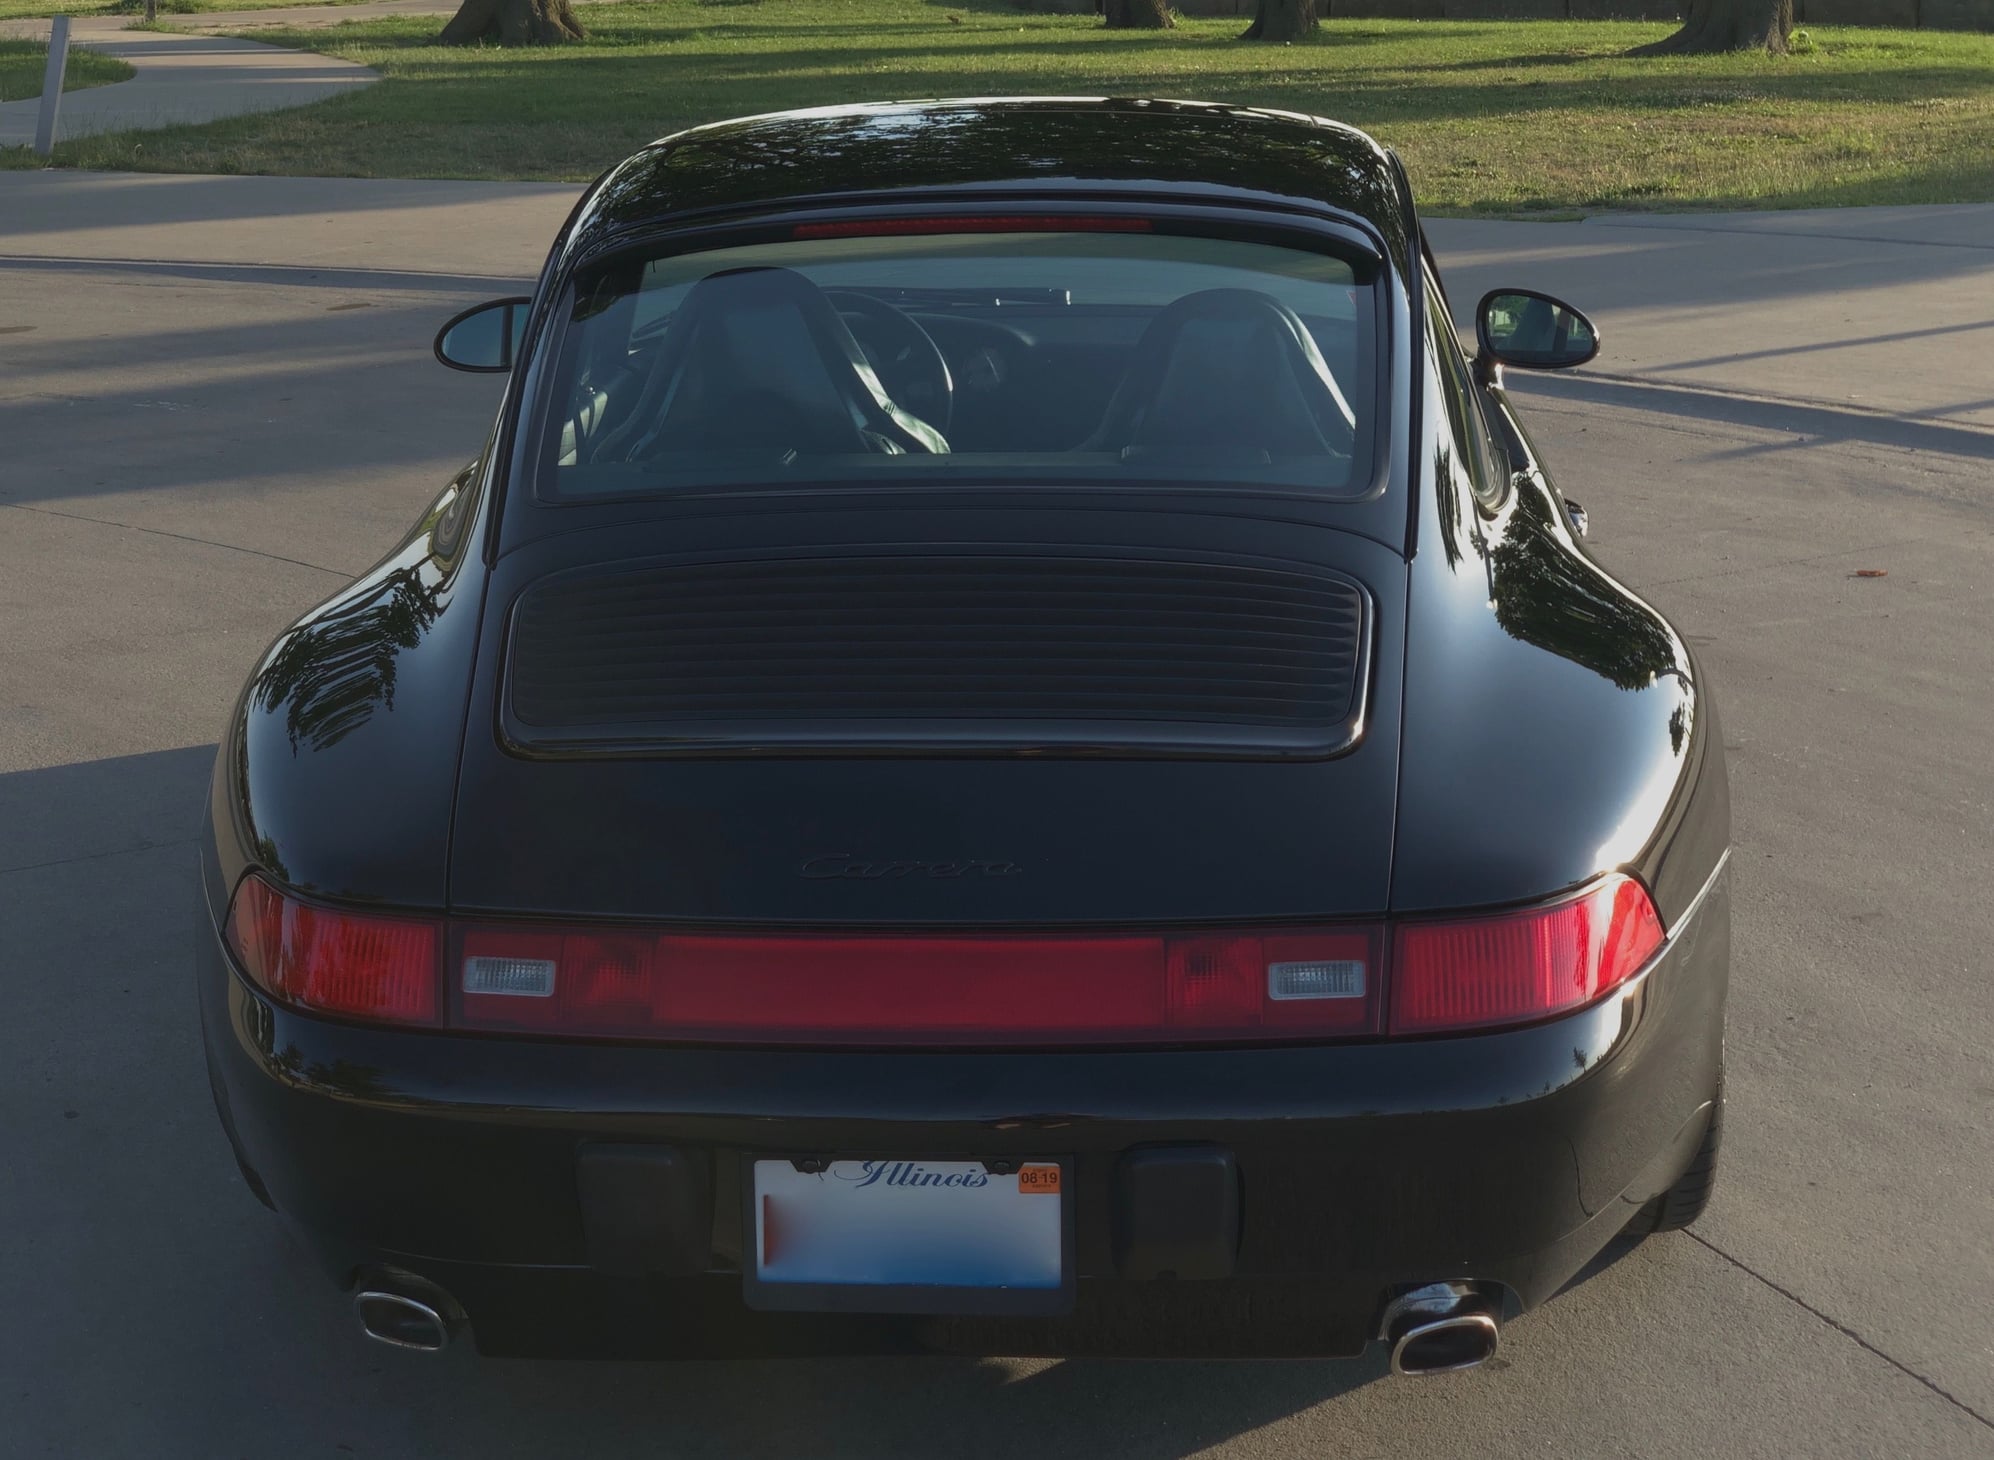 1997 Porsche 911 - 1997 C2 Coupe Black/Black 38,500mi - Used - VIN WPOAA299XVS321859 - 38,570 Miles - 6 cyl - 2WD - Manual - Coupe - Black - Chicago, IL 60657, United States